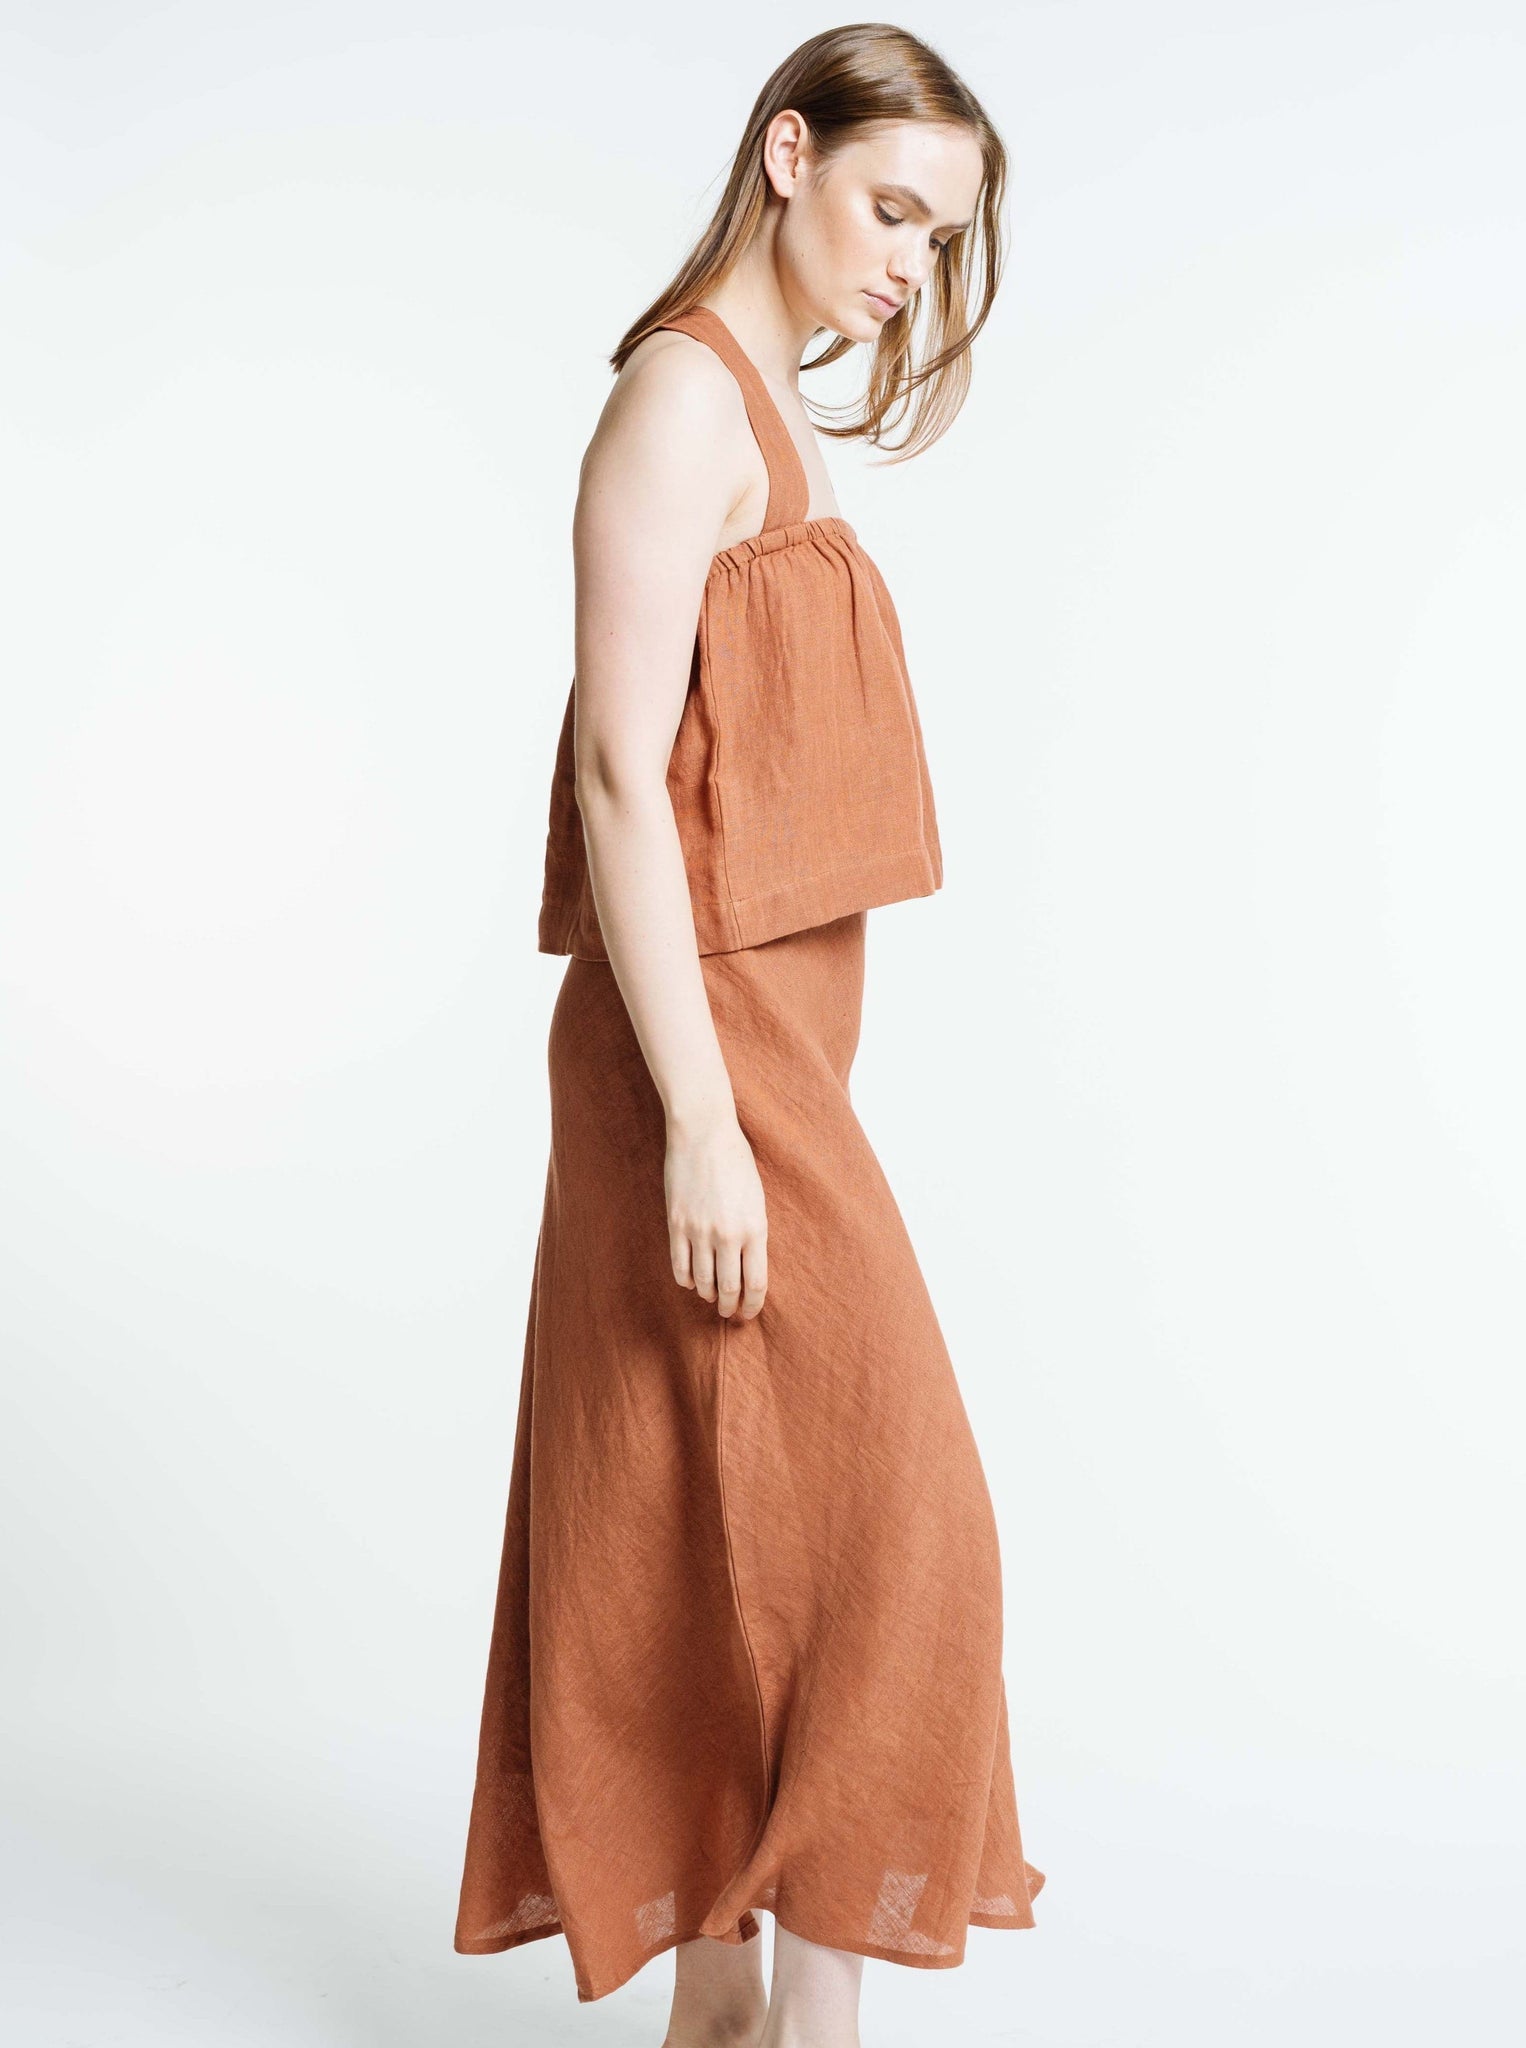 The model is wearing a Jardín Midi Skirt - Amber Brown - Sample.